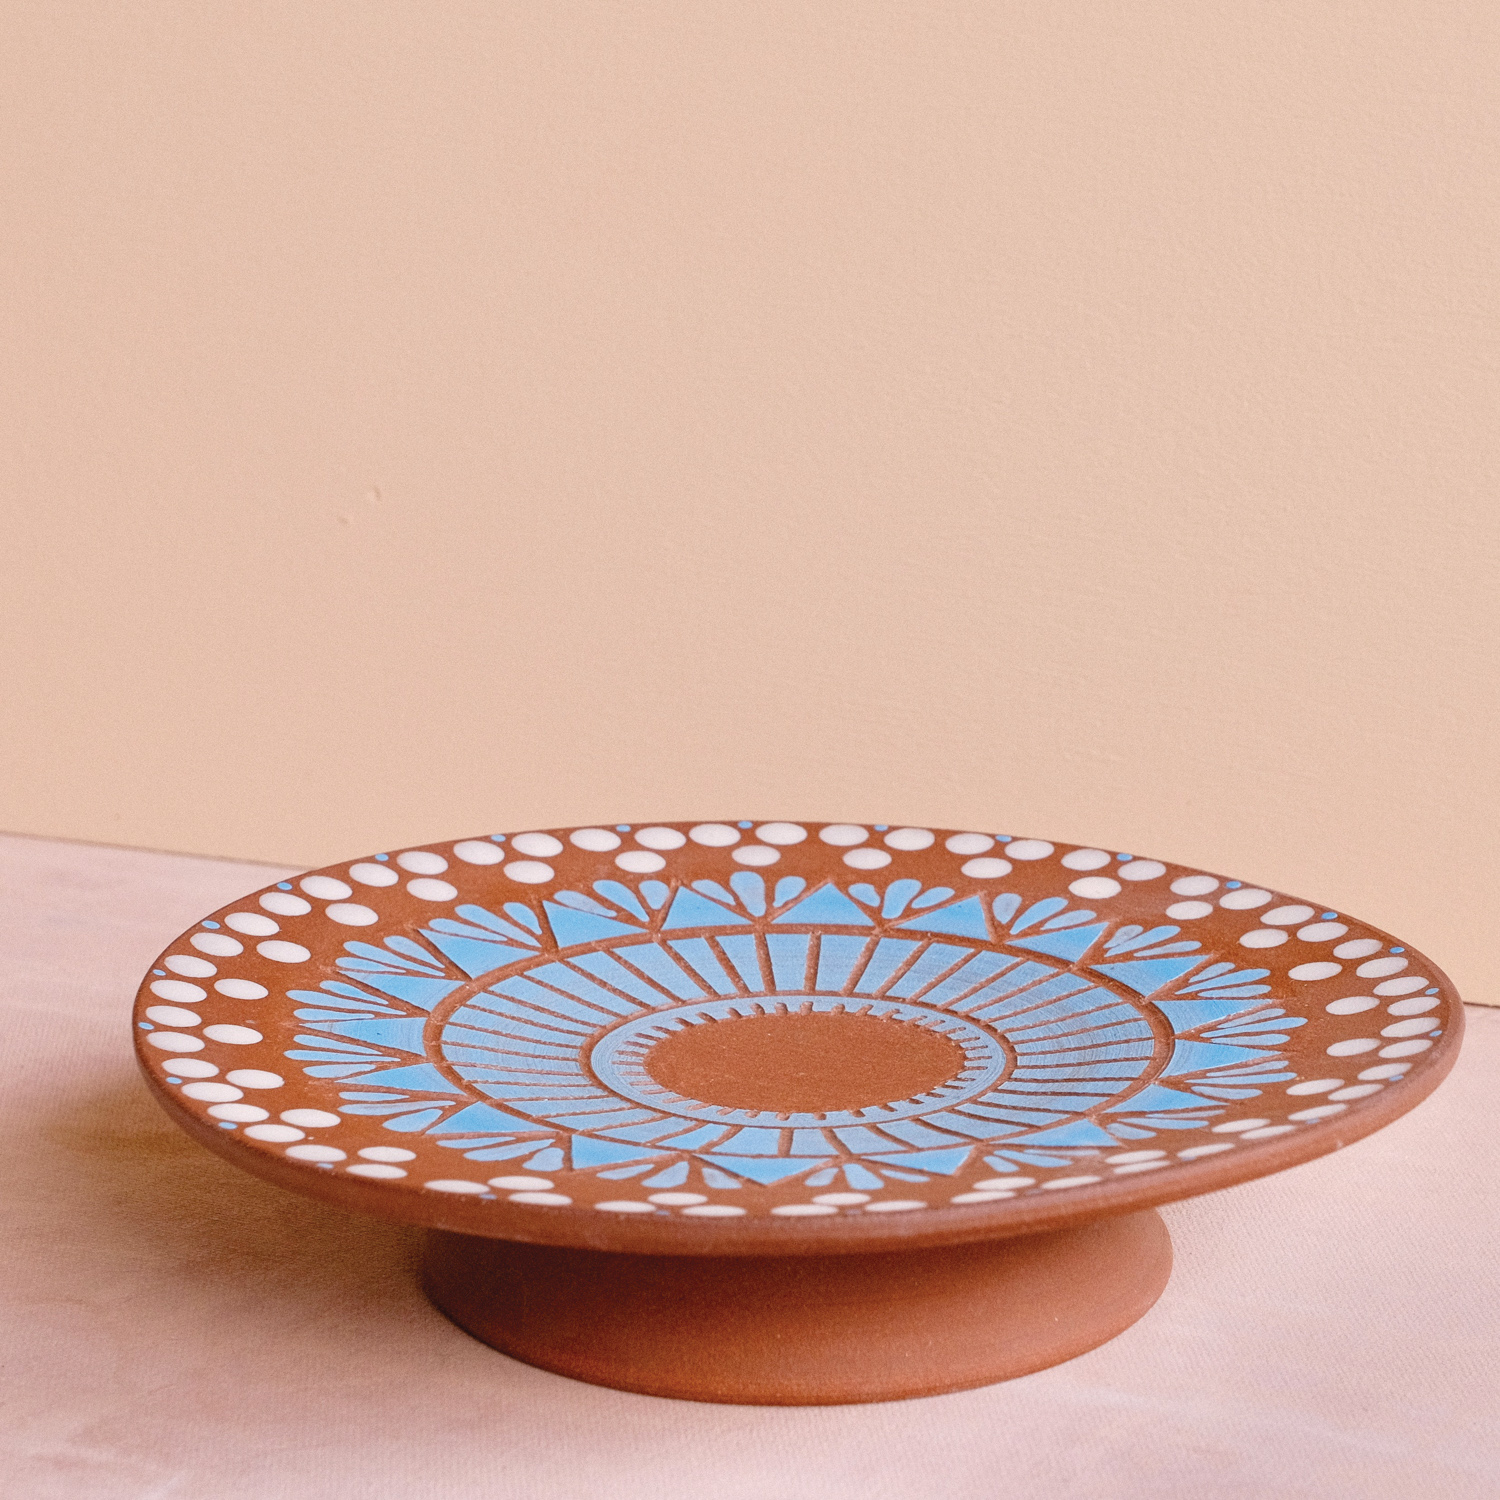 Settle Ceramics x Peptalks bowl